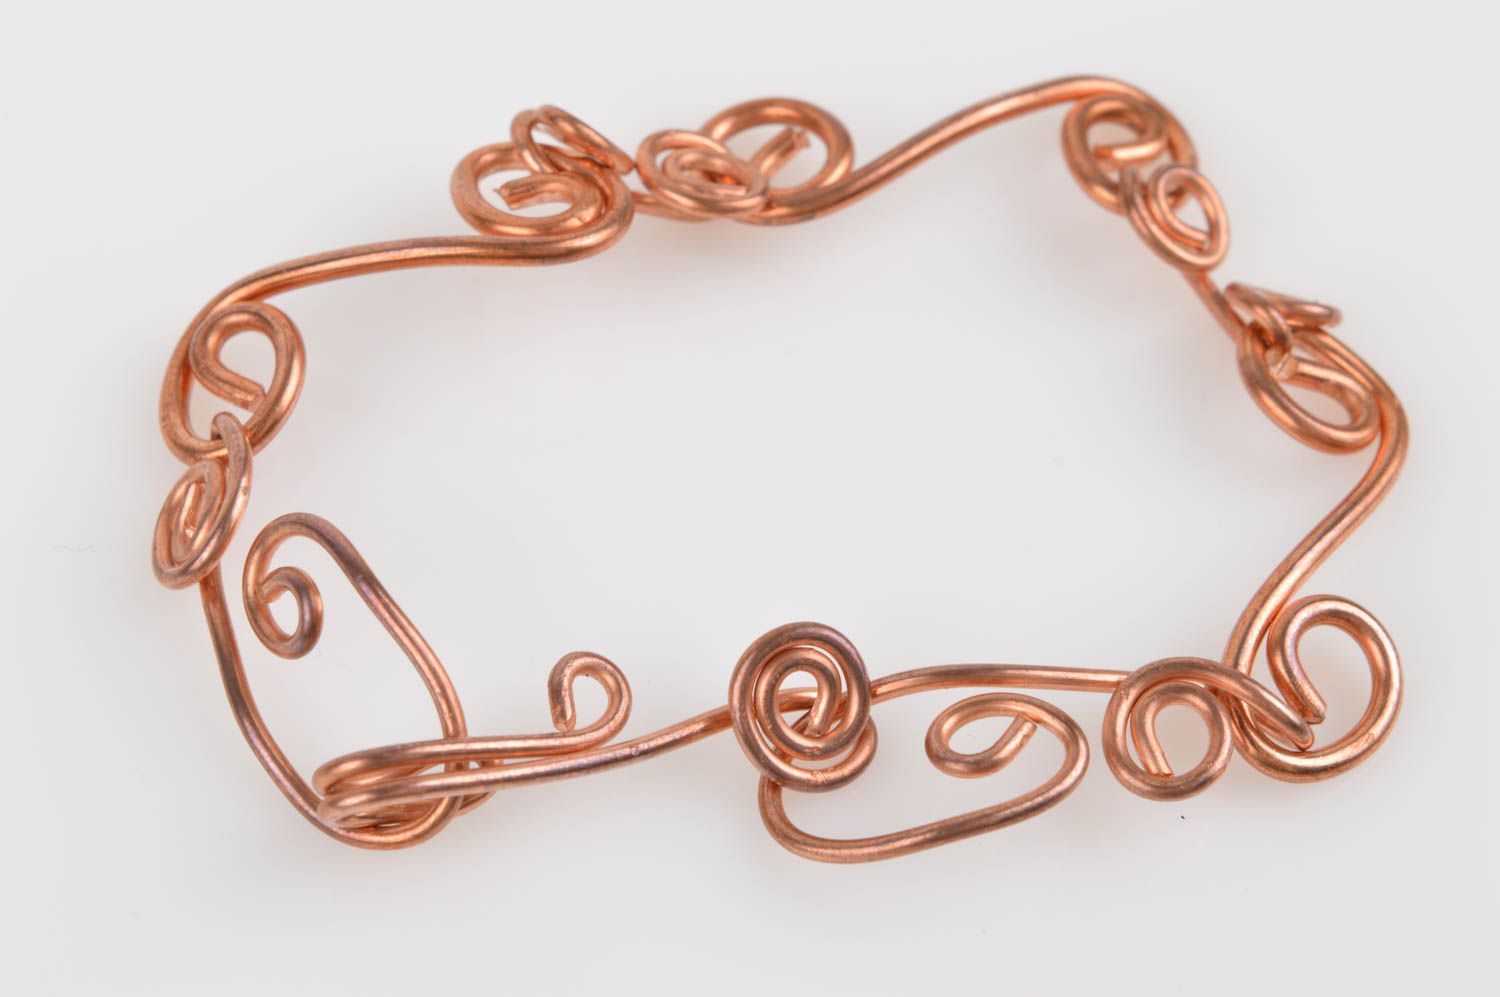 Copper bracelet designer accessories handmade jewelry womens bracelet gift ideas photo 2